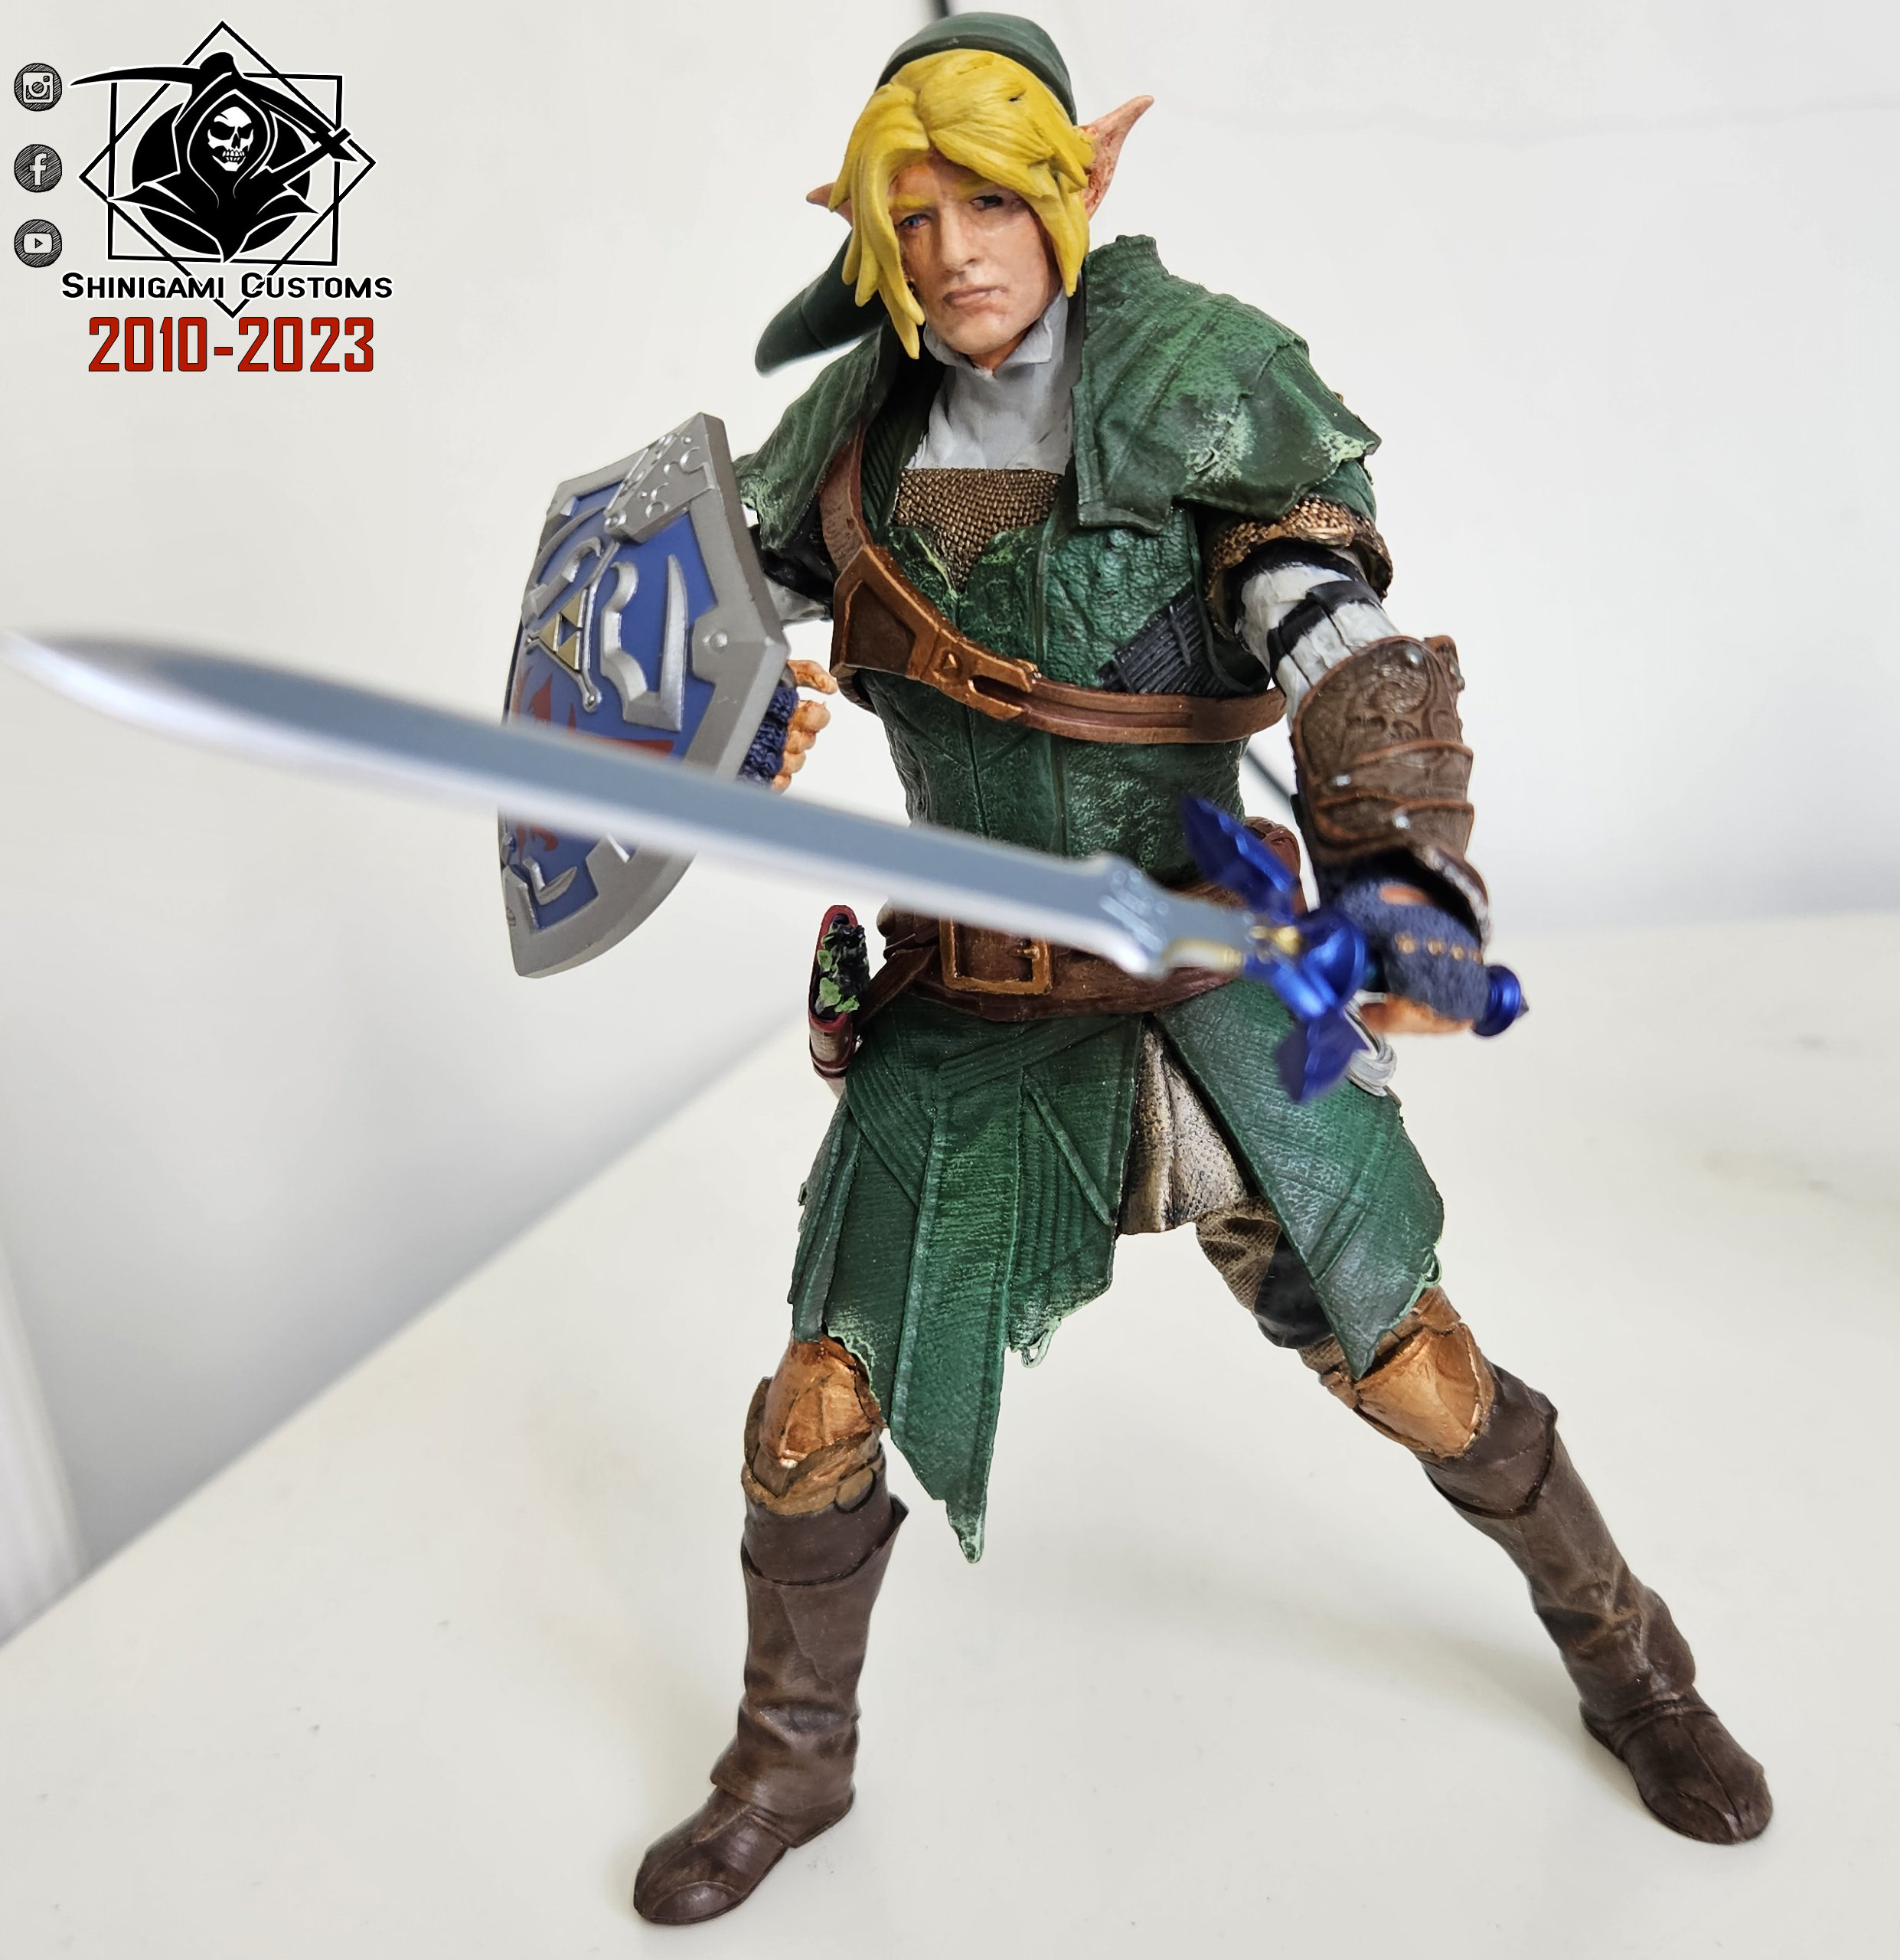 Vintage Legend Of Zelda Figures: Collectors selling these now!